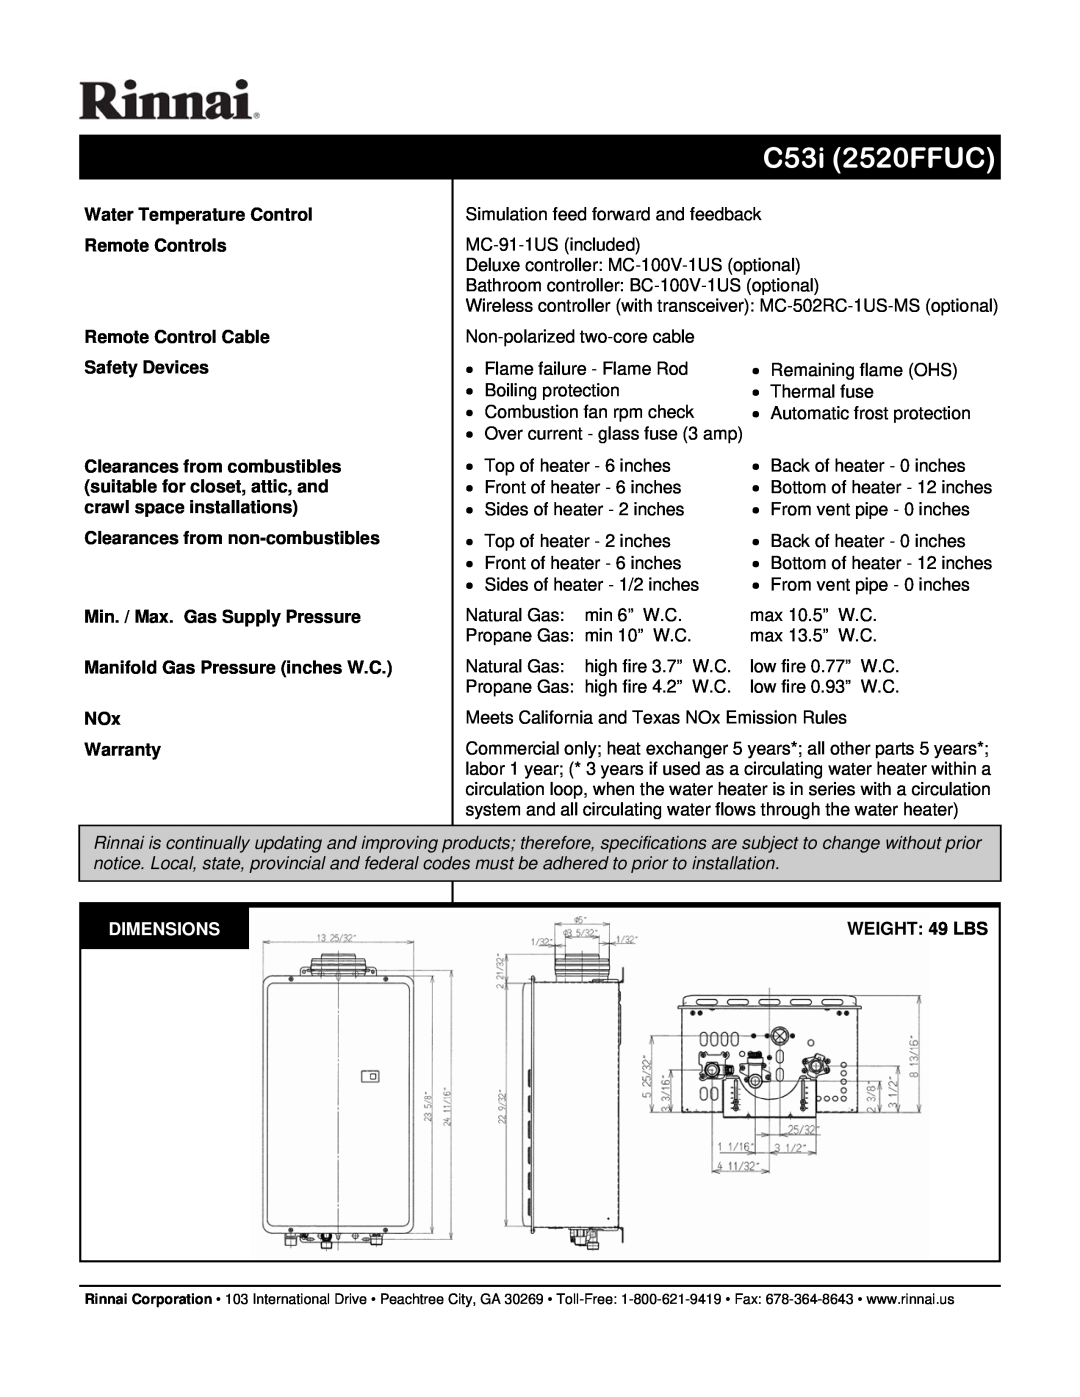 Rinnai REU-V2520FFUC-US manual Dimensions, WEIGHT 49 LBS, C53i 2520FFUC, Water Temperature Control Remote Controls 